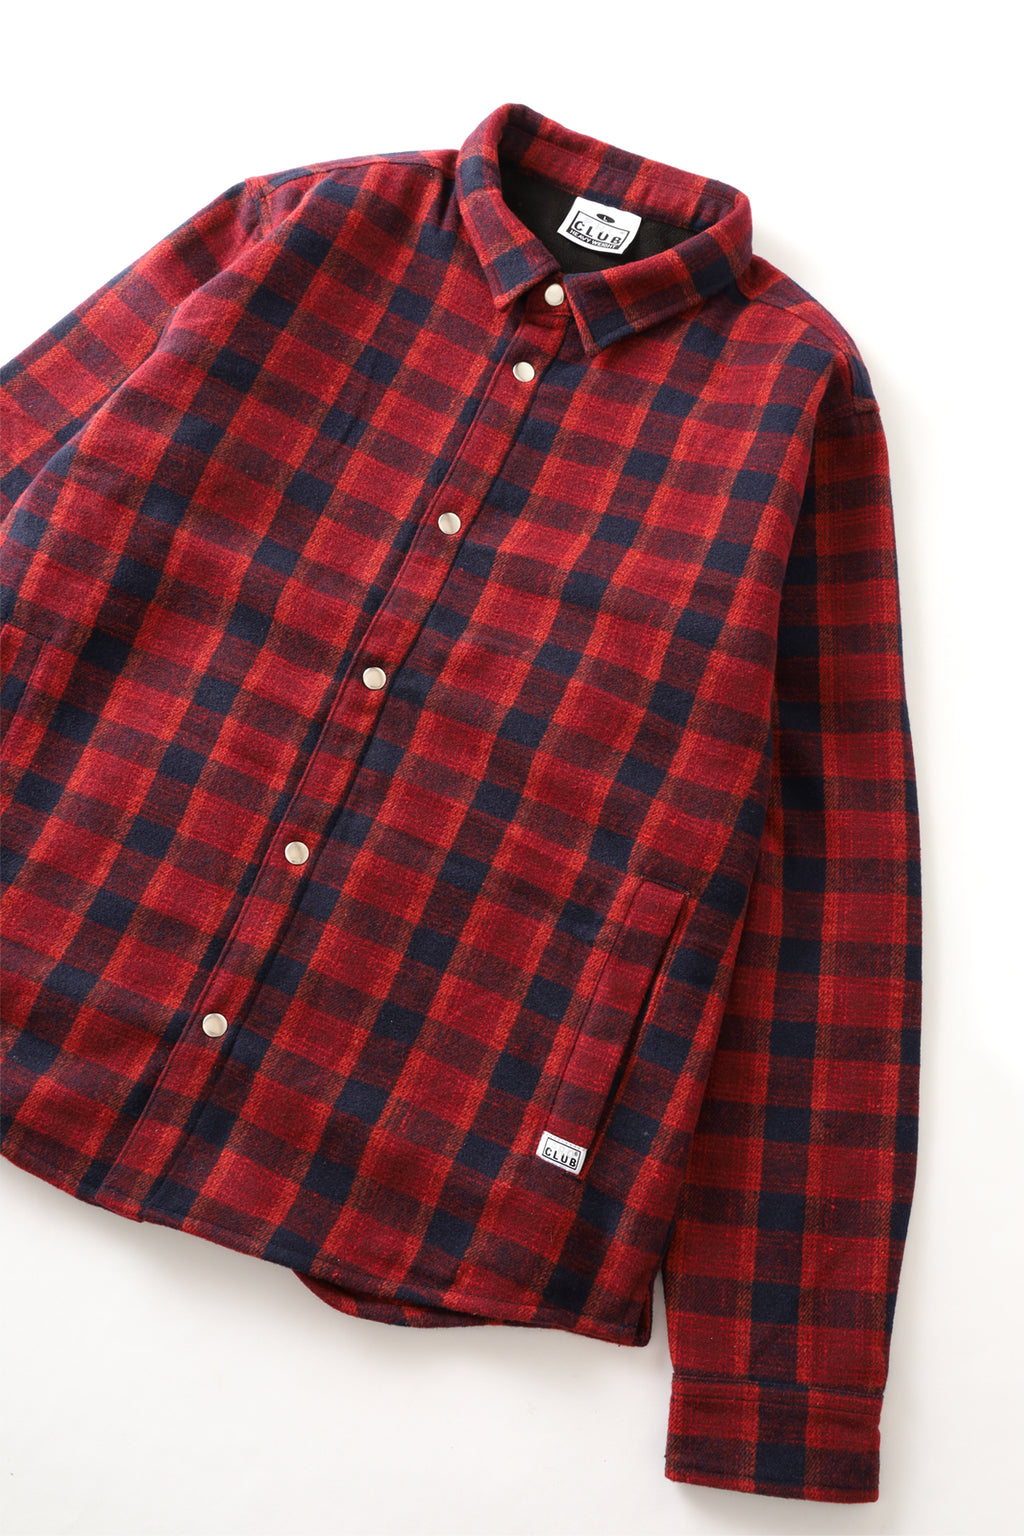 Pro Club - Flannel Work Shirt - Red/Navy